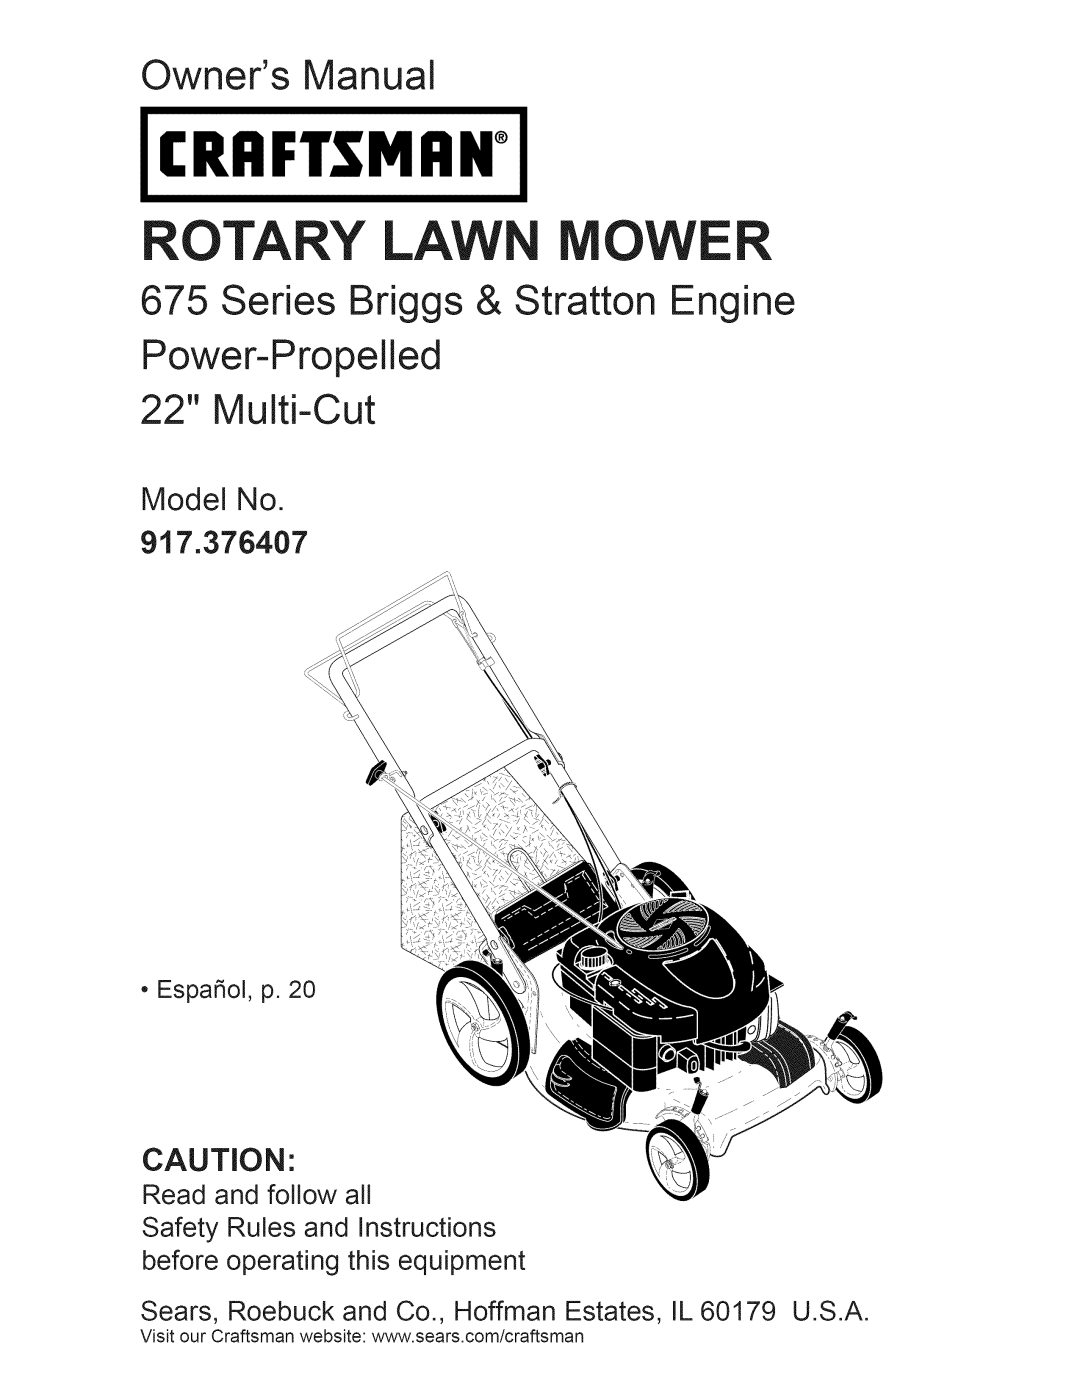 Craftsman owner manual Model No 917.376407, Craftsman, Rotary Lawn Mower, Owners Manual, Power-Propelled 22 Multi-Cut 